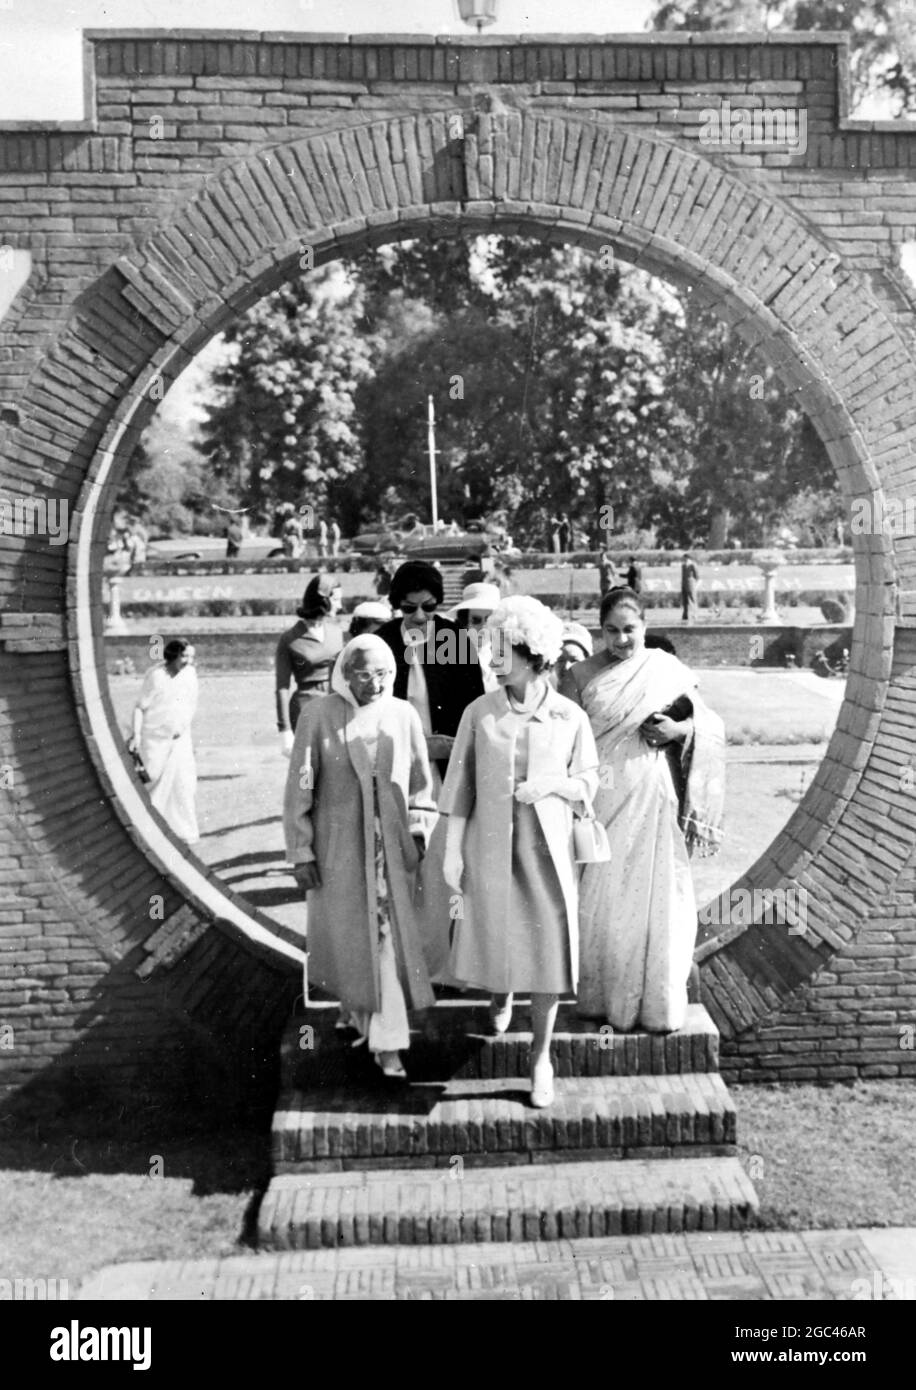 QUEEN ELIZABETH II VISITS LADIES CLUB IN LAHORE, PAKISTAN 15 FEBRUARY 1961 Stock Photo